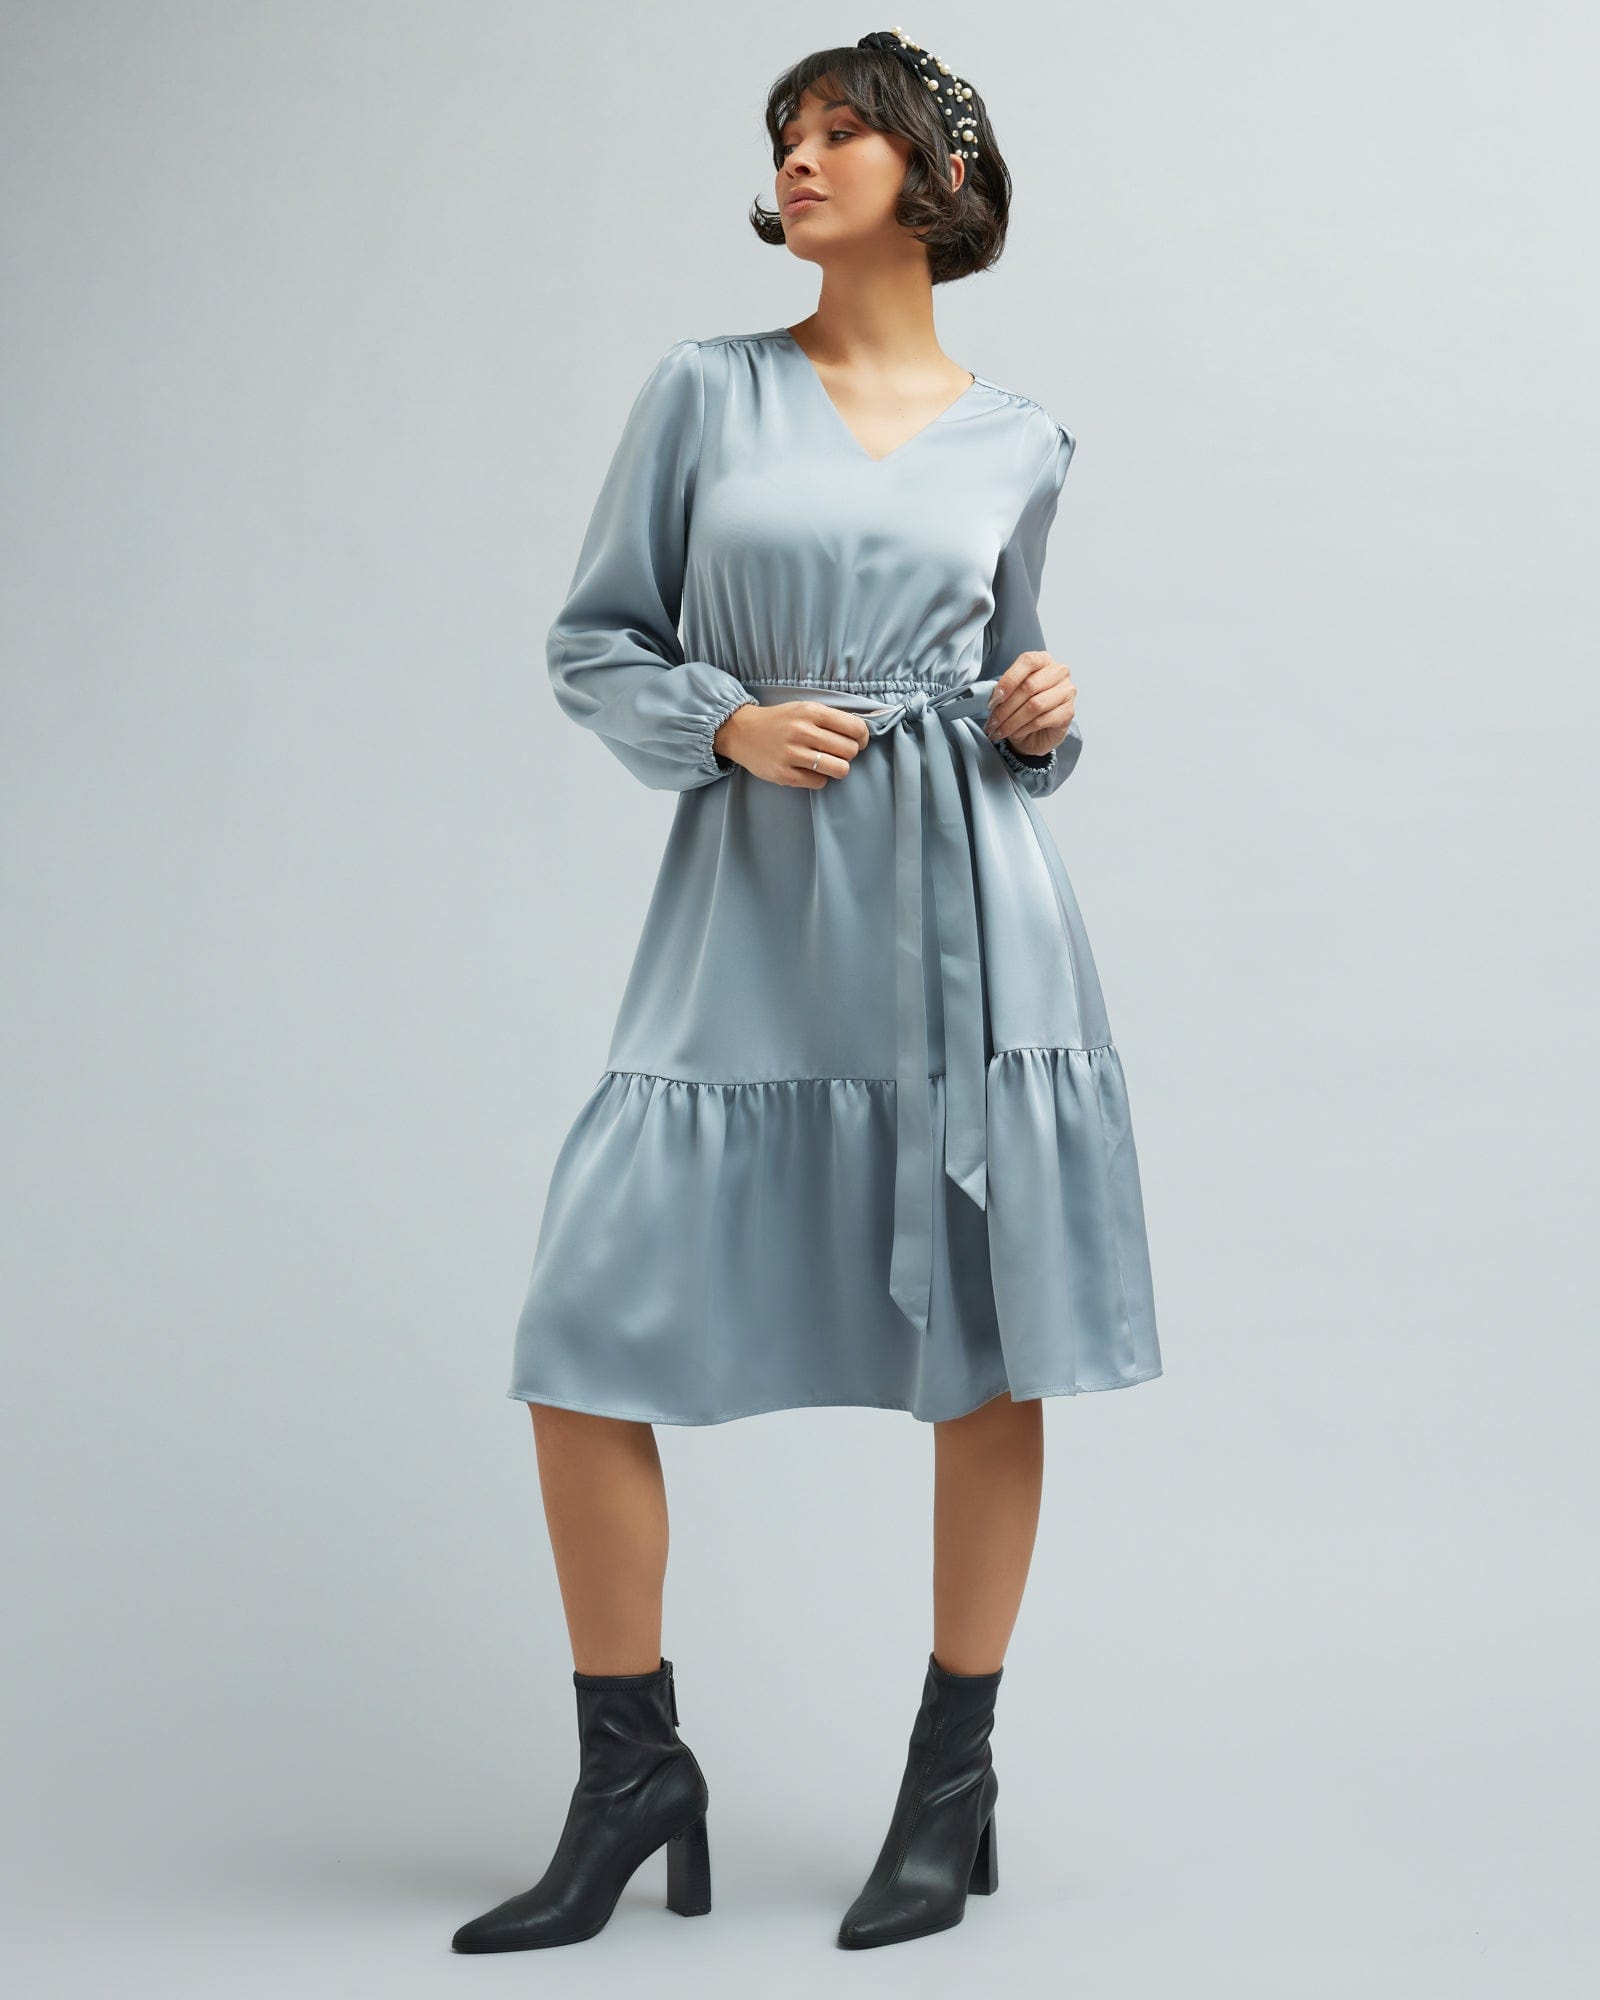 Woman in a long sleeve, knee-length blue dress